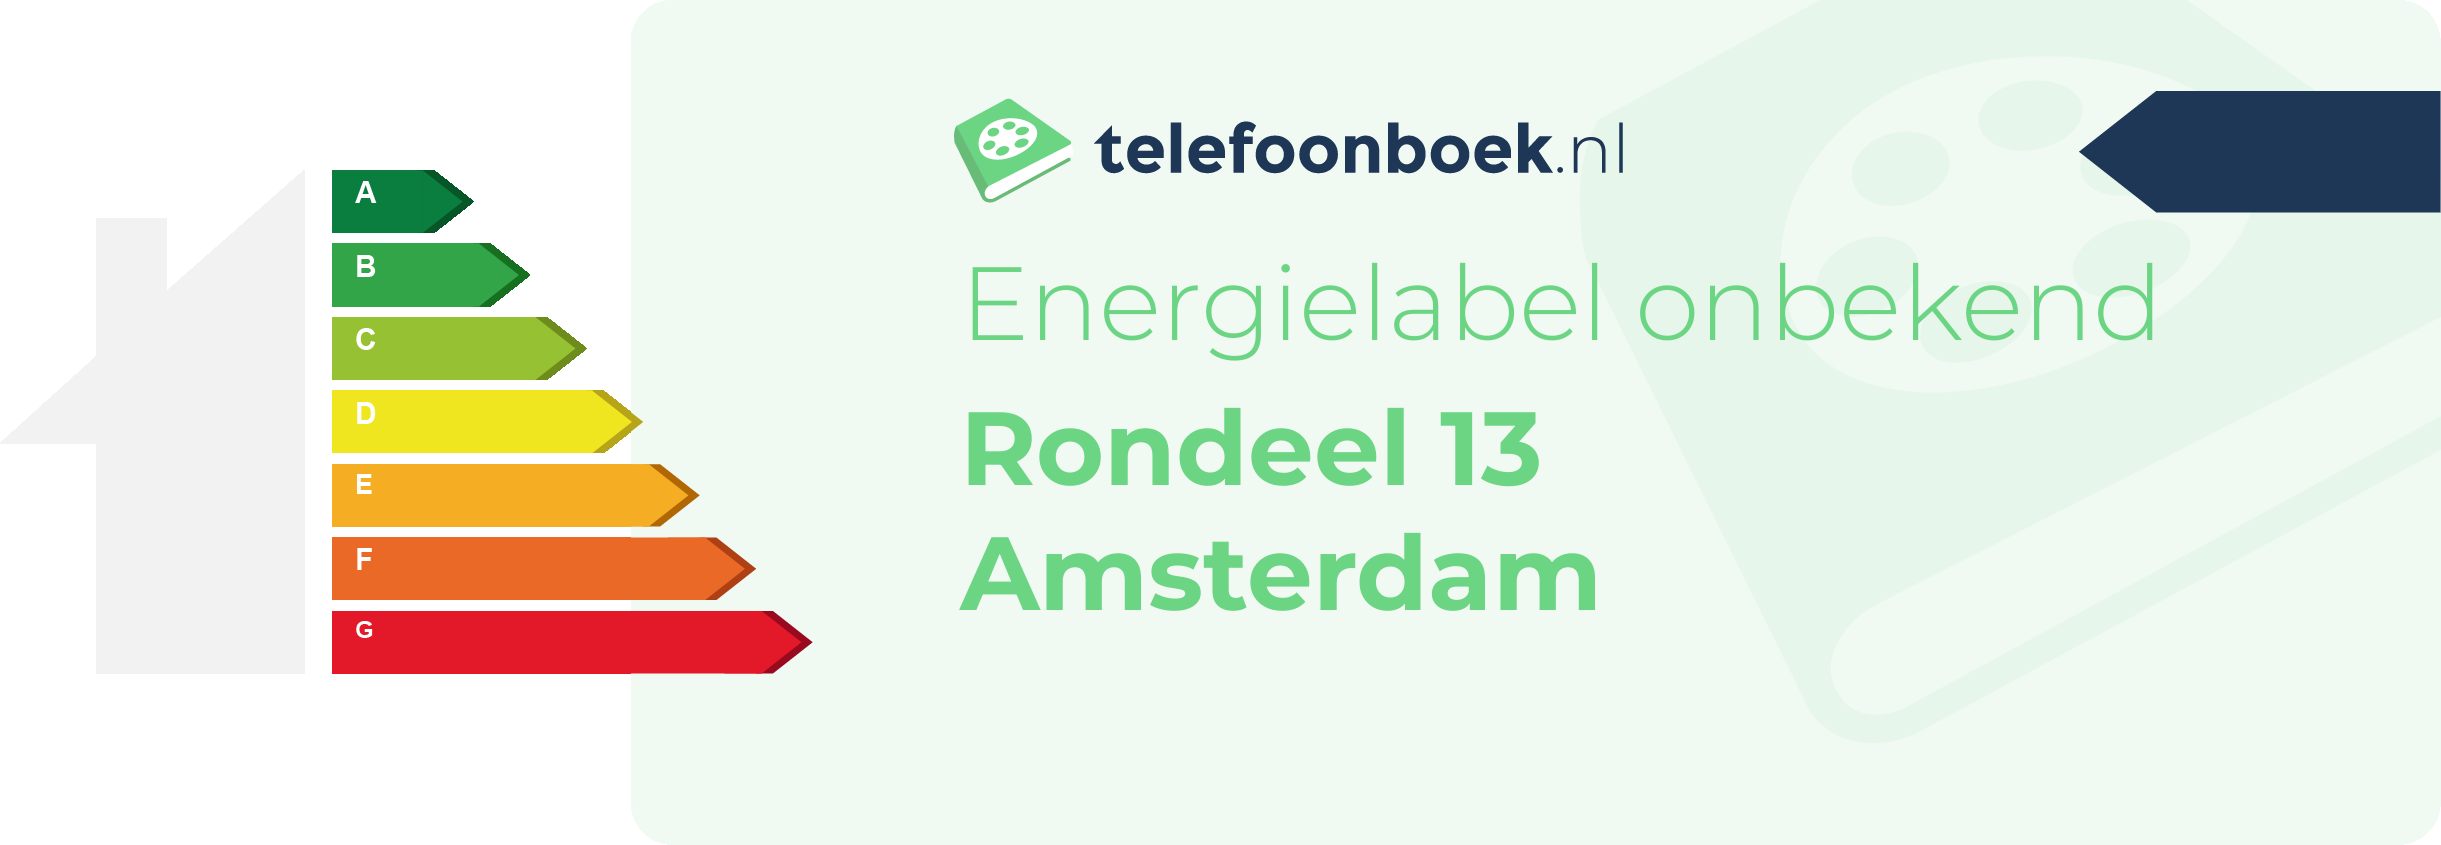 Energielabel Rondeel 13 Amsterdam